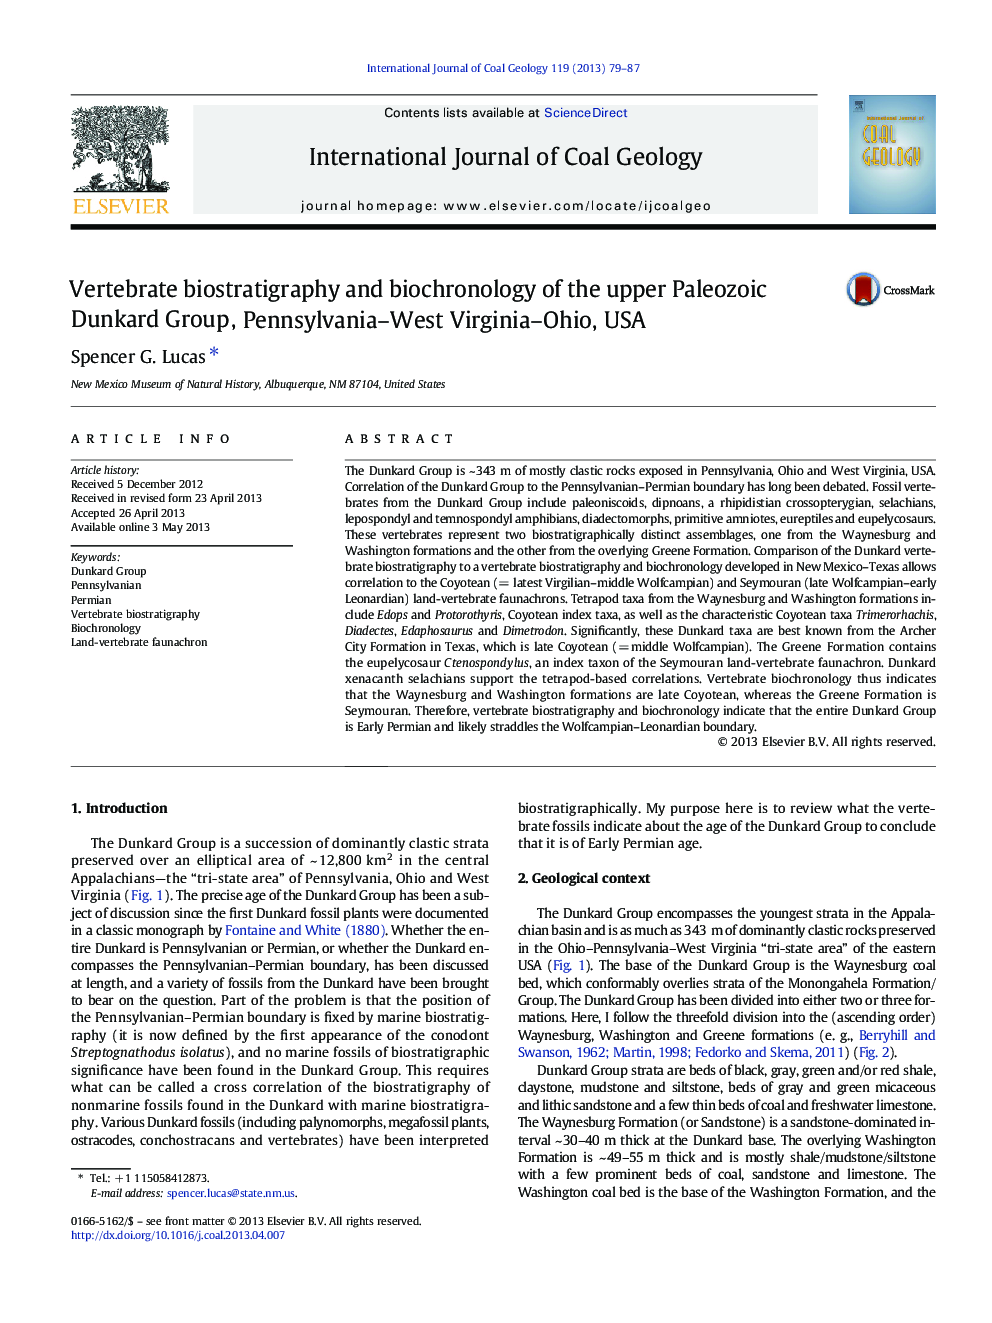 Vertebrate biostratigraphy and biochronology of the upper Paleozoic Dunkard Group, Pennsylvania–West Virginia–Ohio, USA